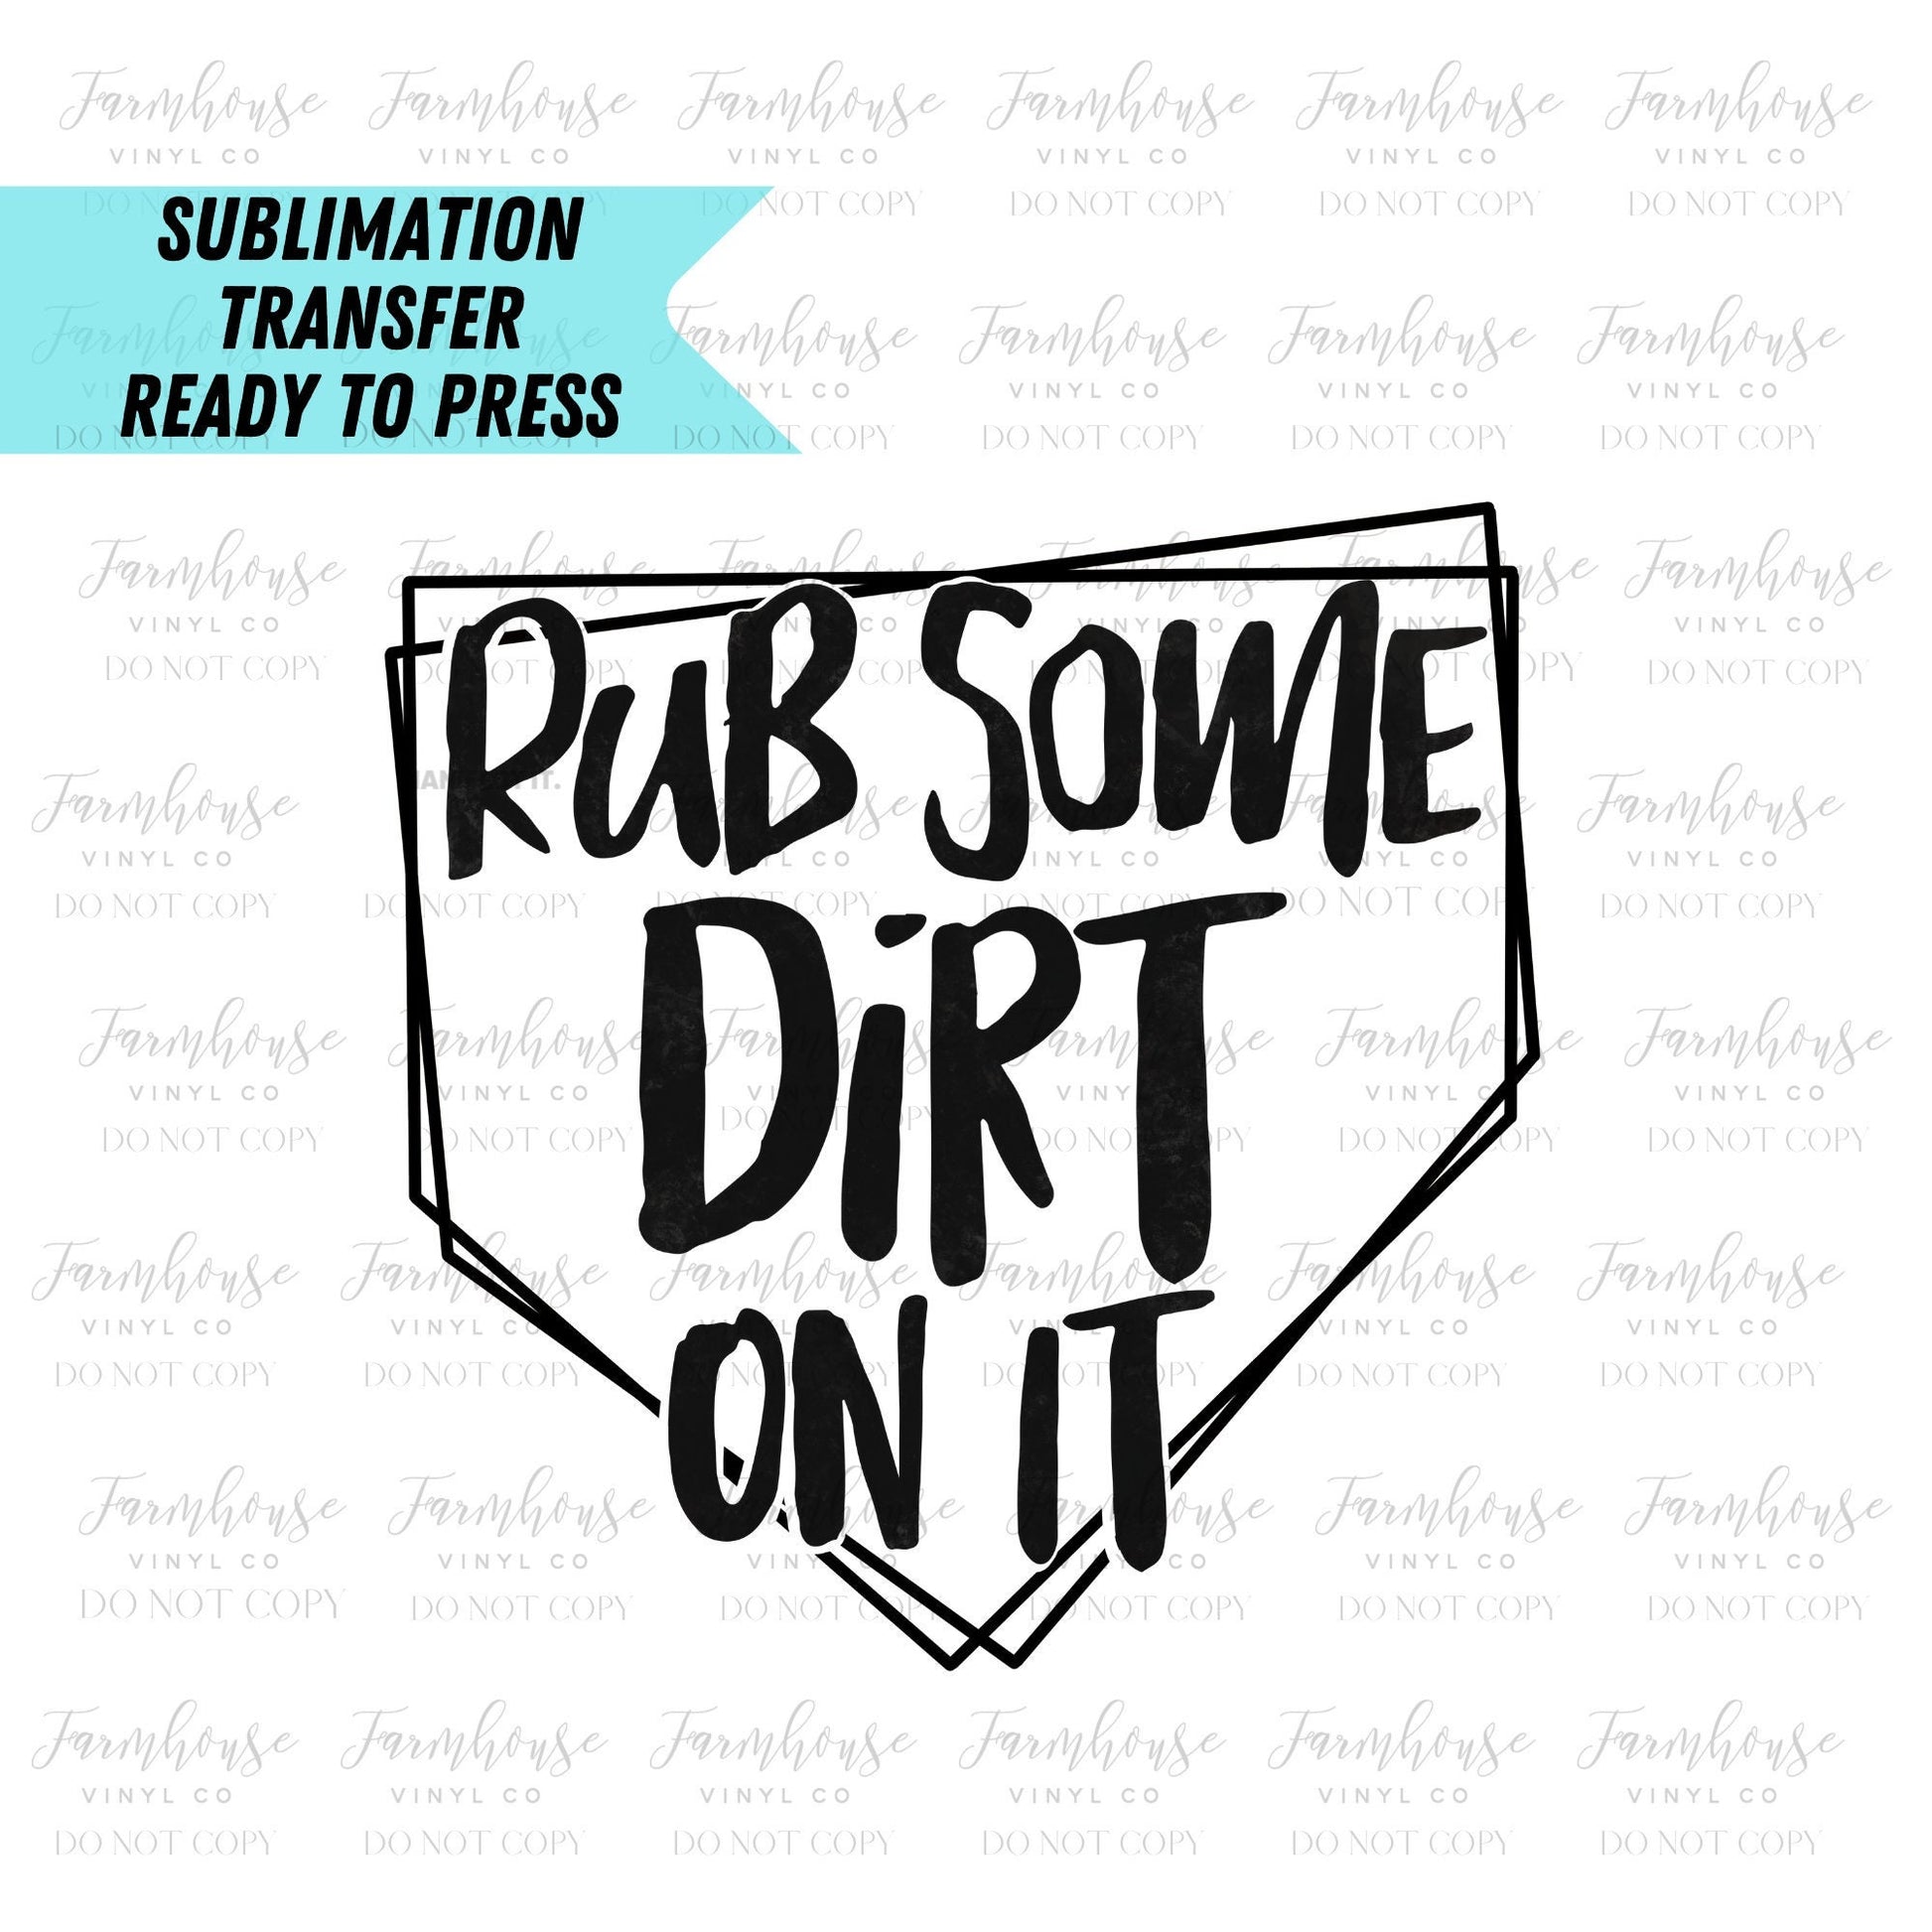 Rub Some Dirt on It Ready To Press Sublimation Transfer - Farmhouse Vinyl Co